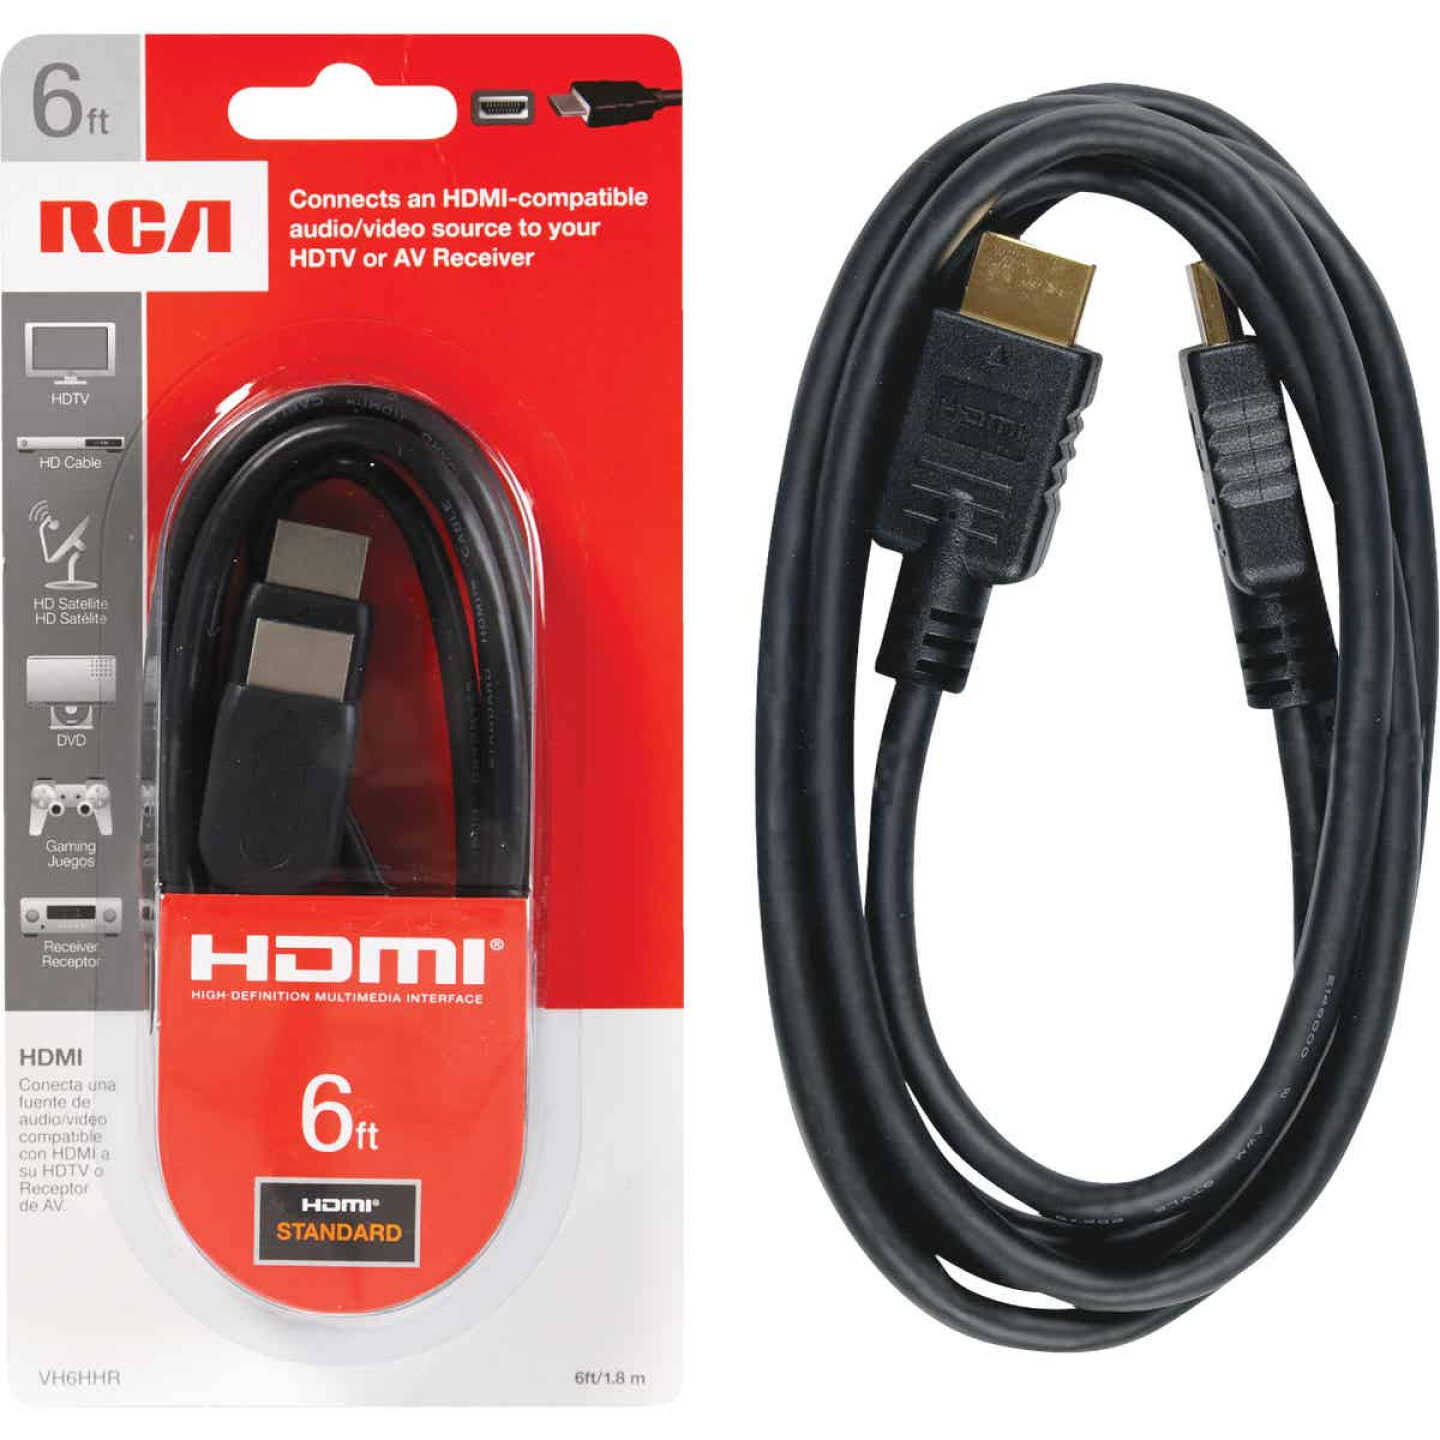 RCA HDMI Cables at